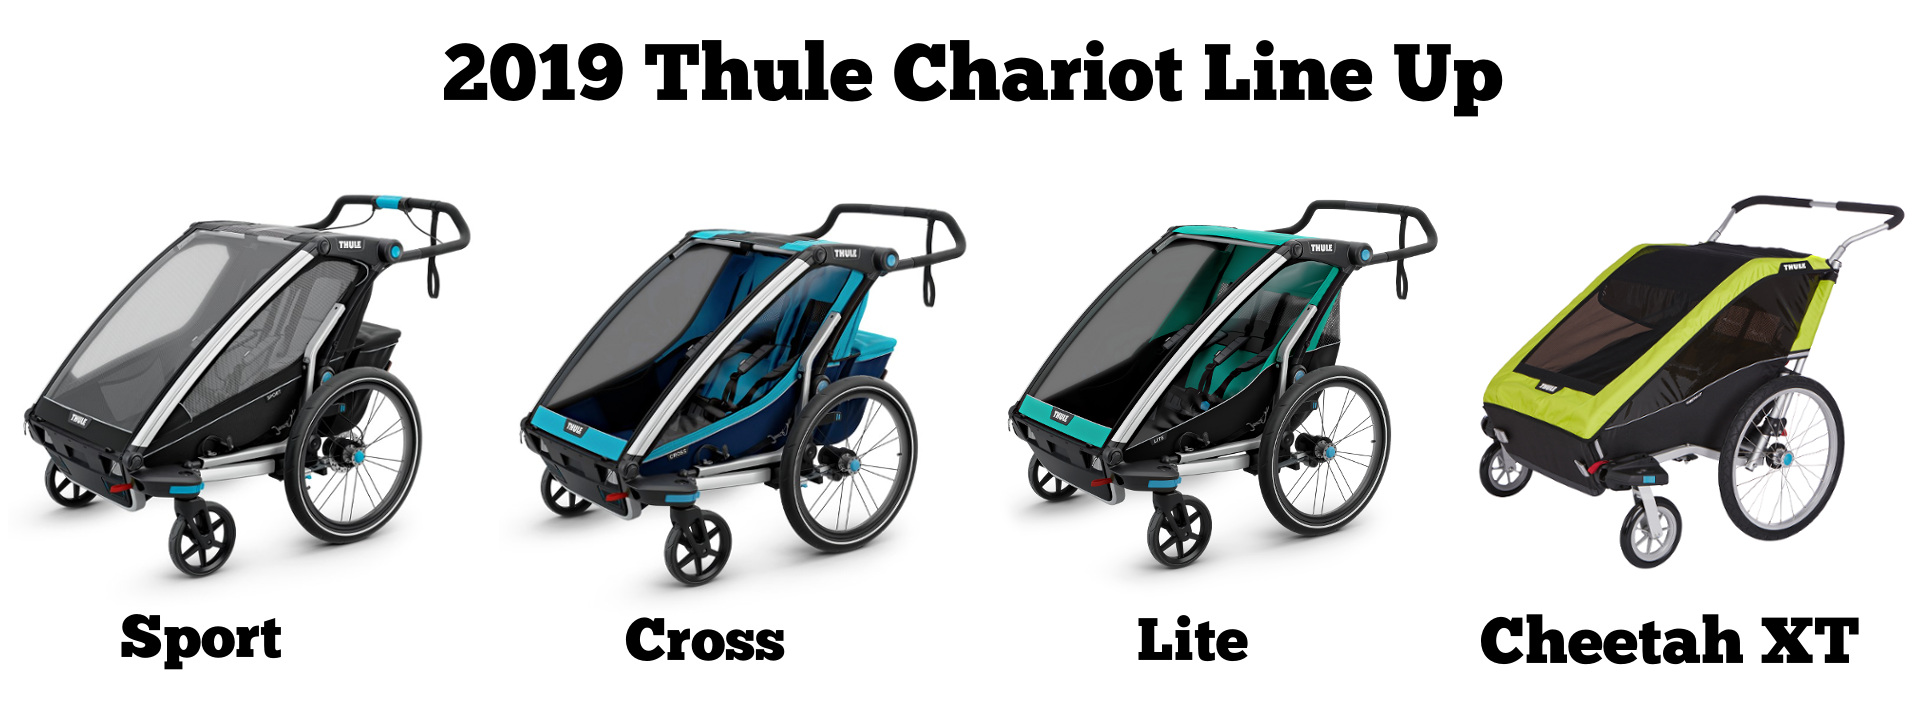 Thule Chariot Comparison Chart